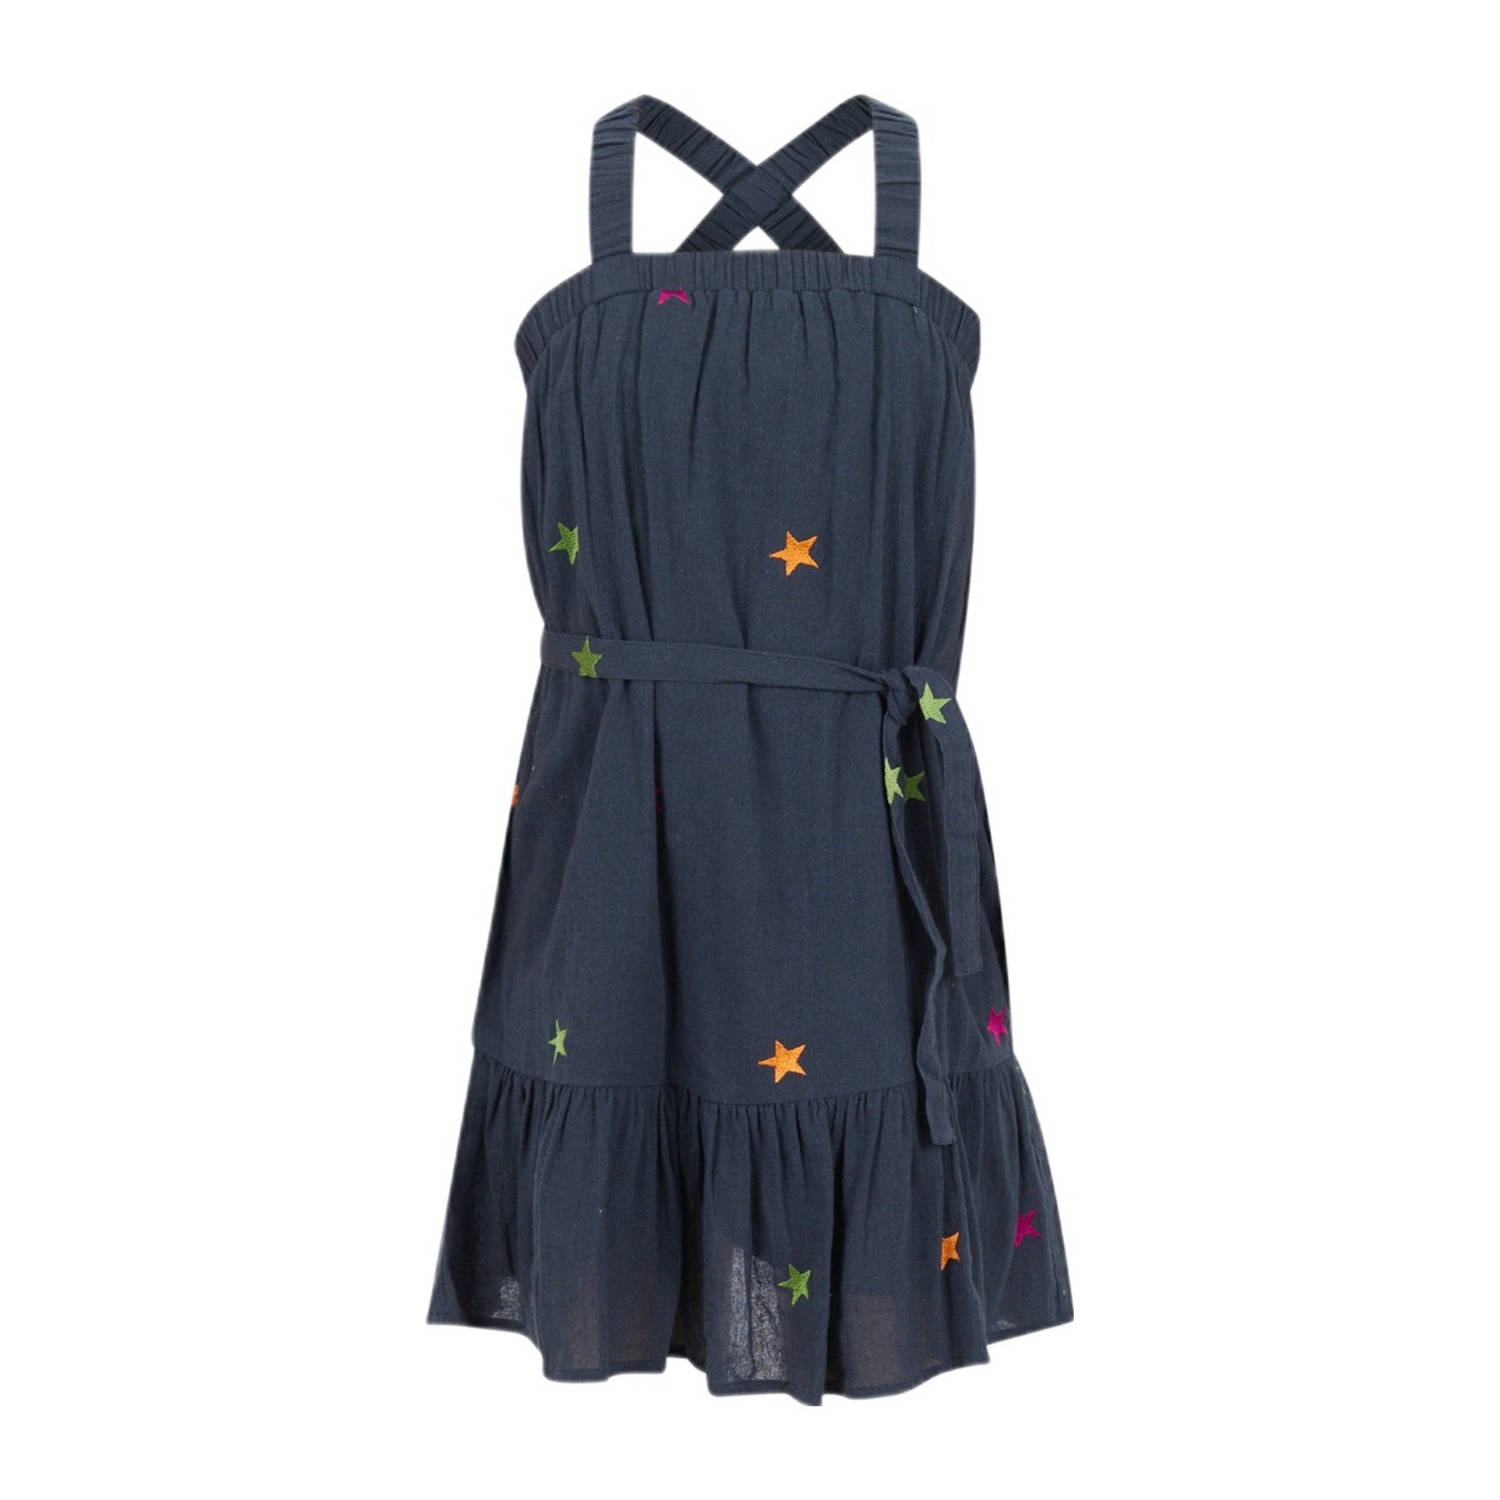 Shoeby jurk met sterren en borduursels donkergrijs Blauw Meisjes Katoen Vierkante hals 134 140